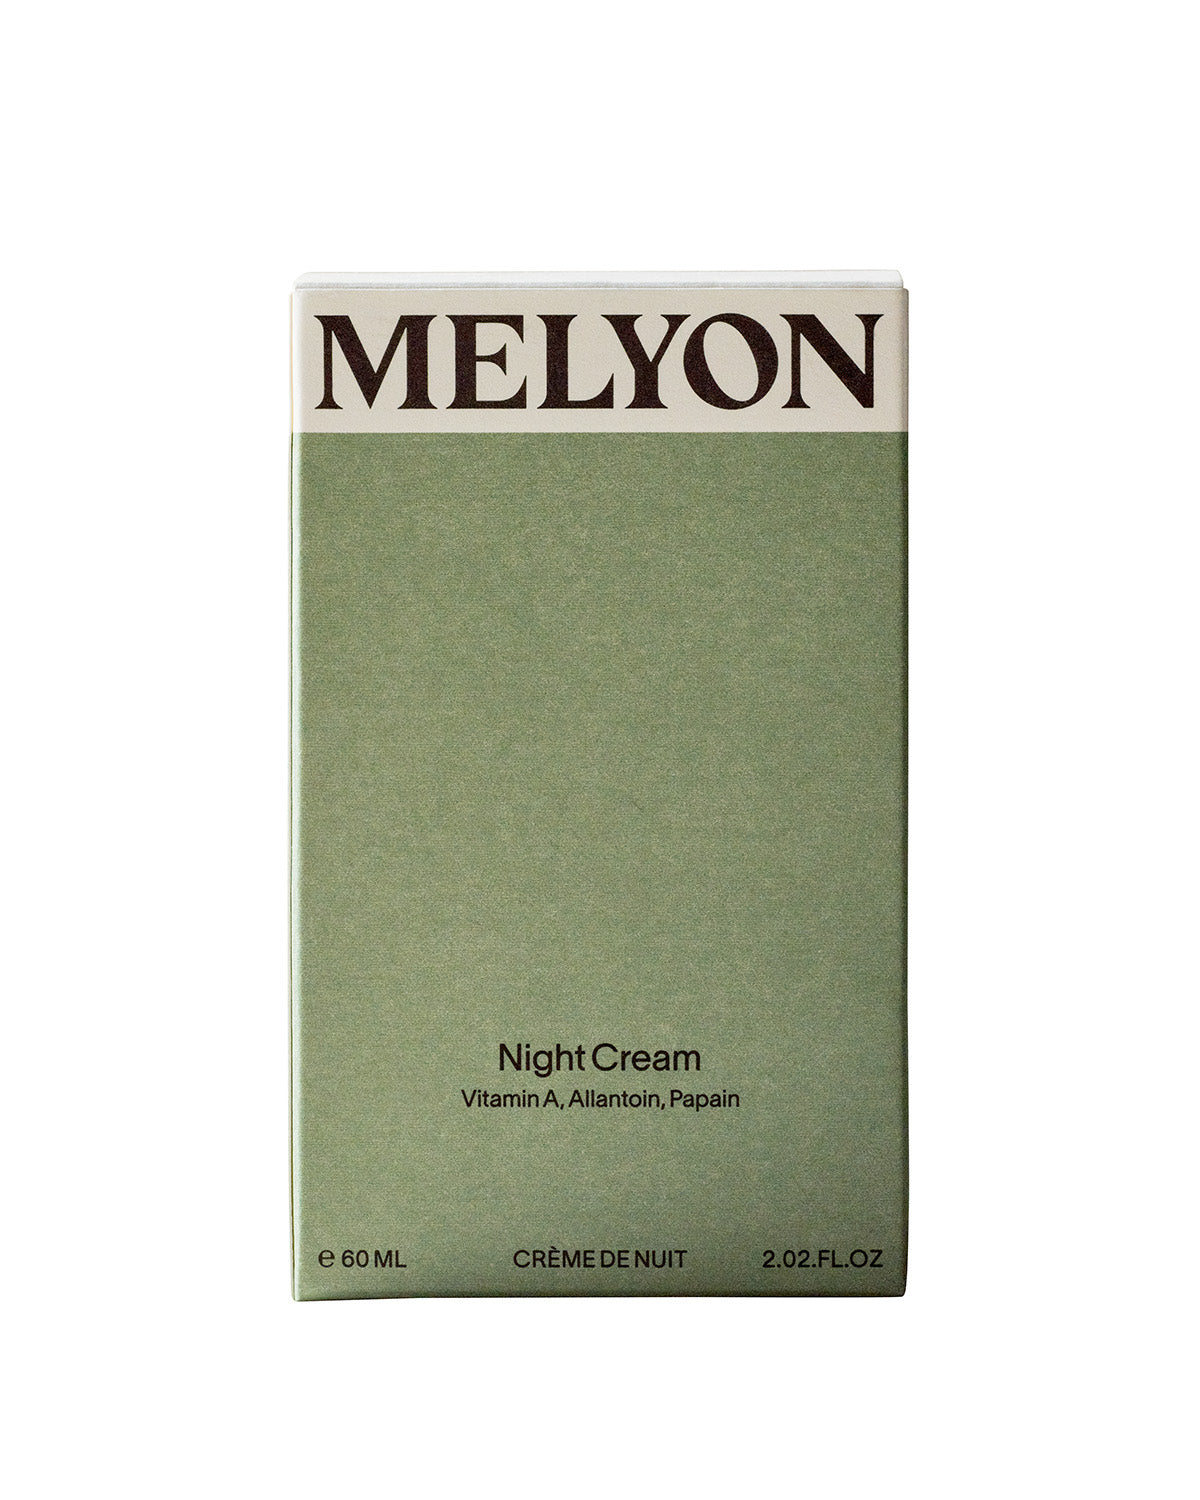 MELYON - NIGHT CREAM